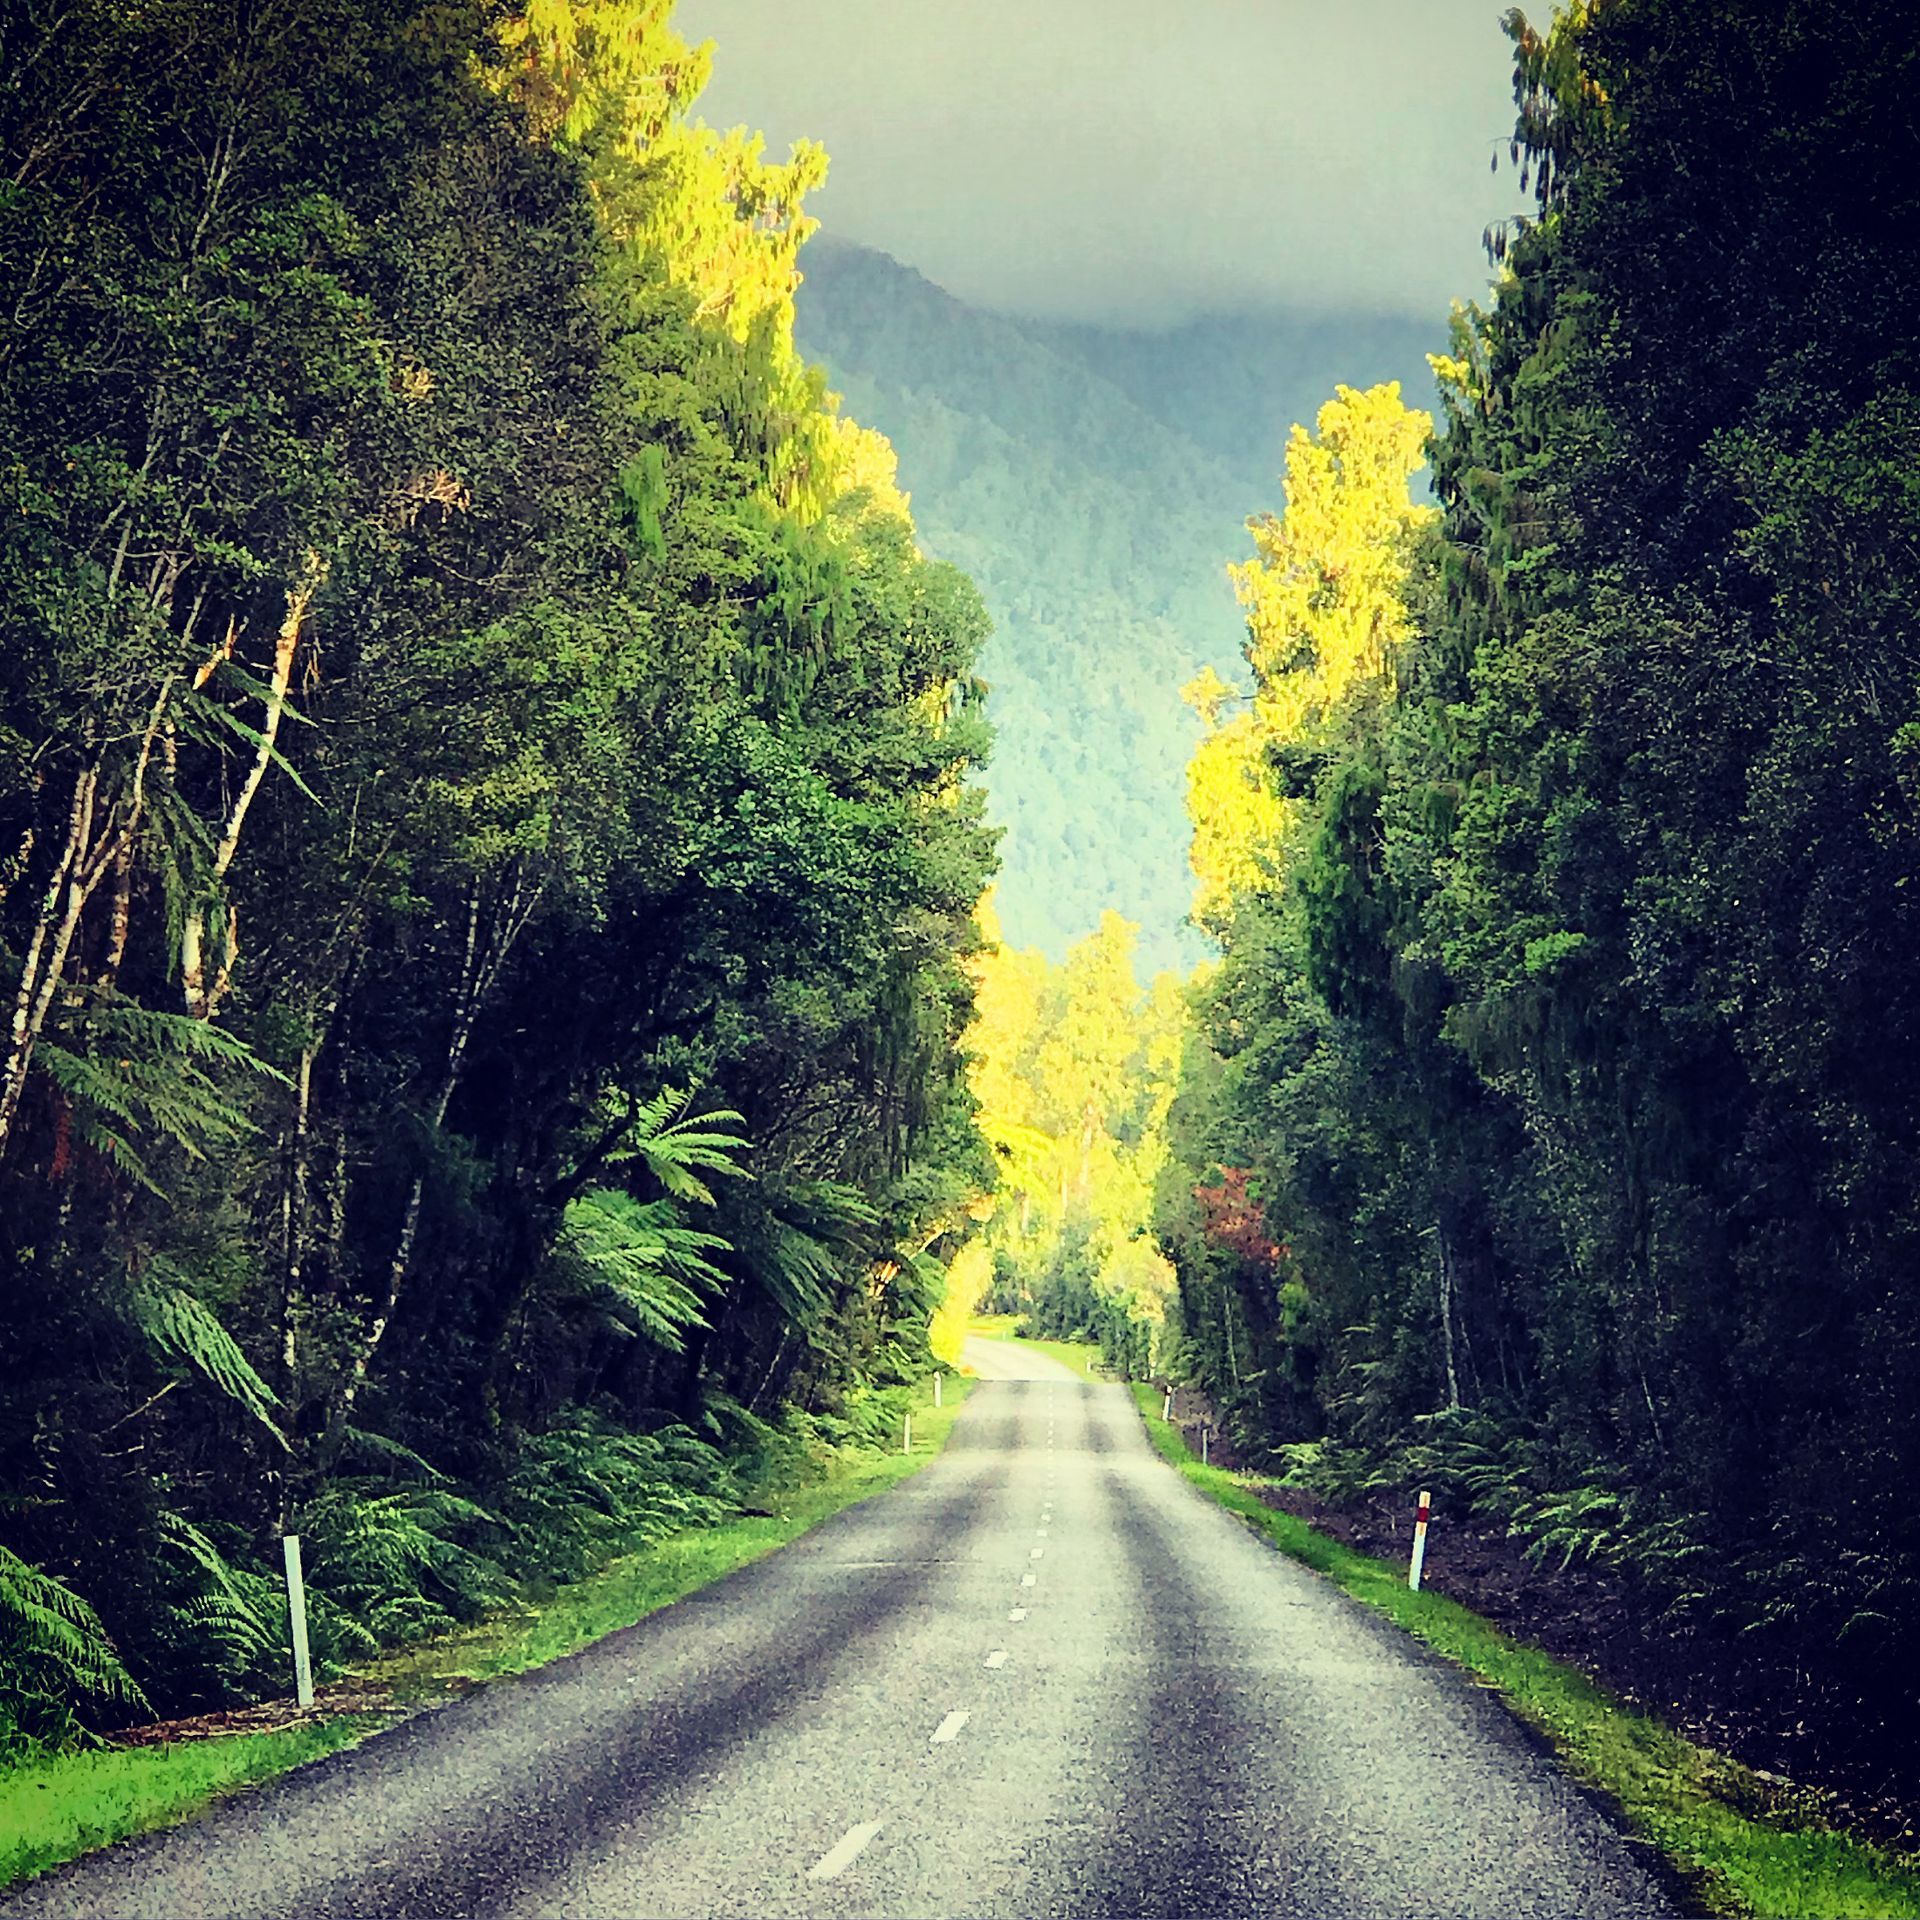 Asphalt road winding through lush green rainforest on the West Coast of New Zealand.